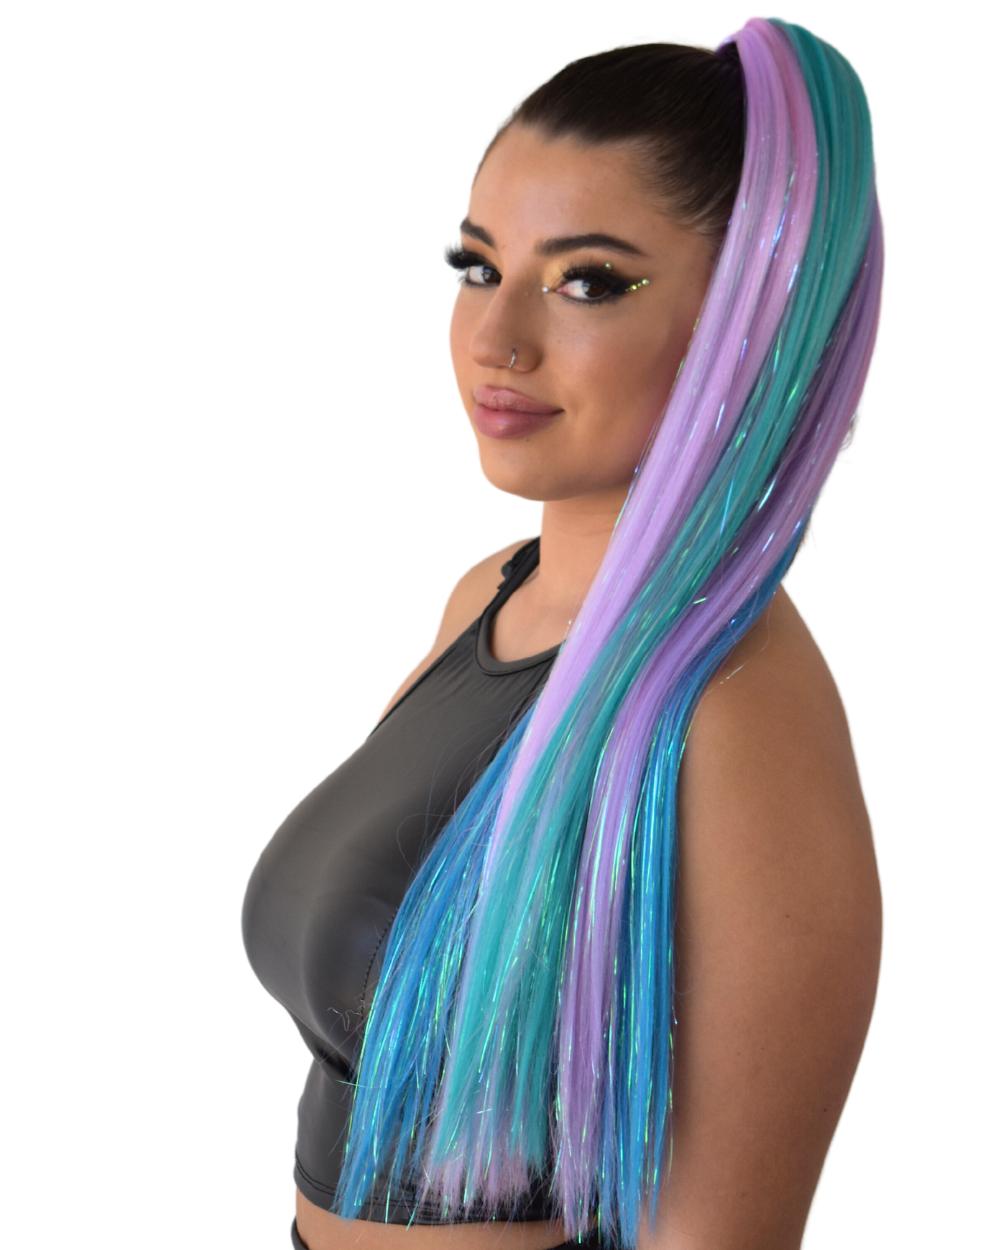 Siren Song - Mermaid Ponytail Hair Extension with Tinsel - Lunautics Ponytail Hair Extension